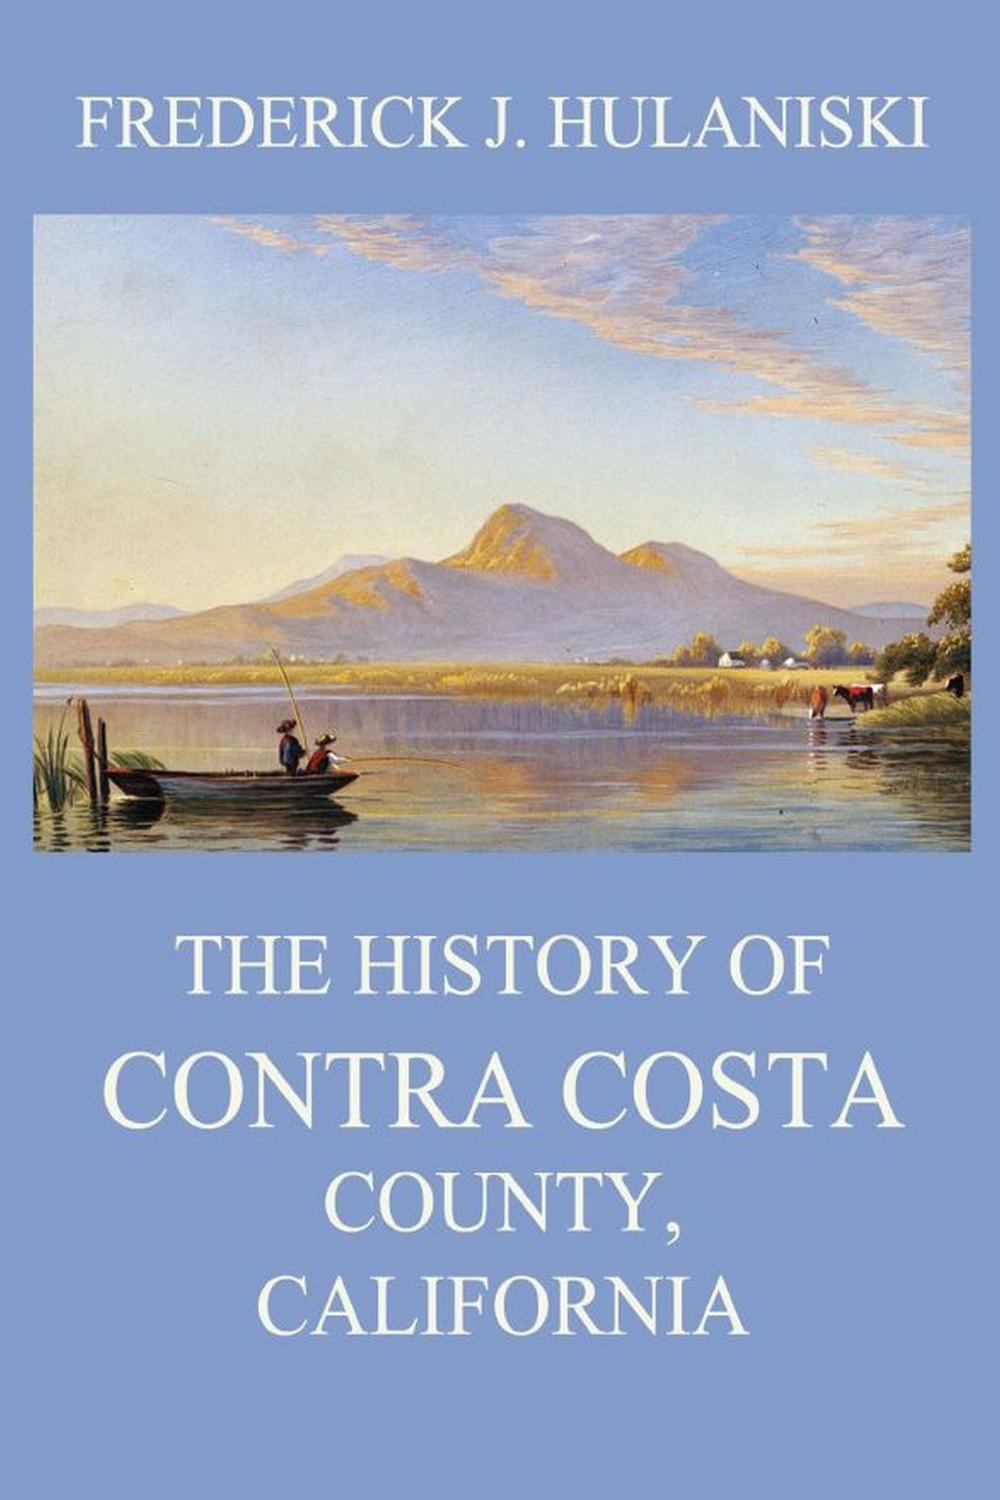 The History of Contra Costa County, California - Frederick J. Hulaniski,,